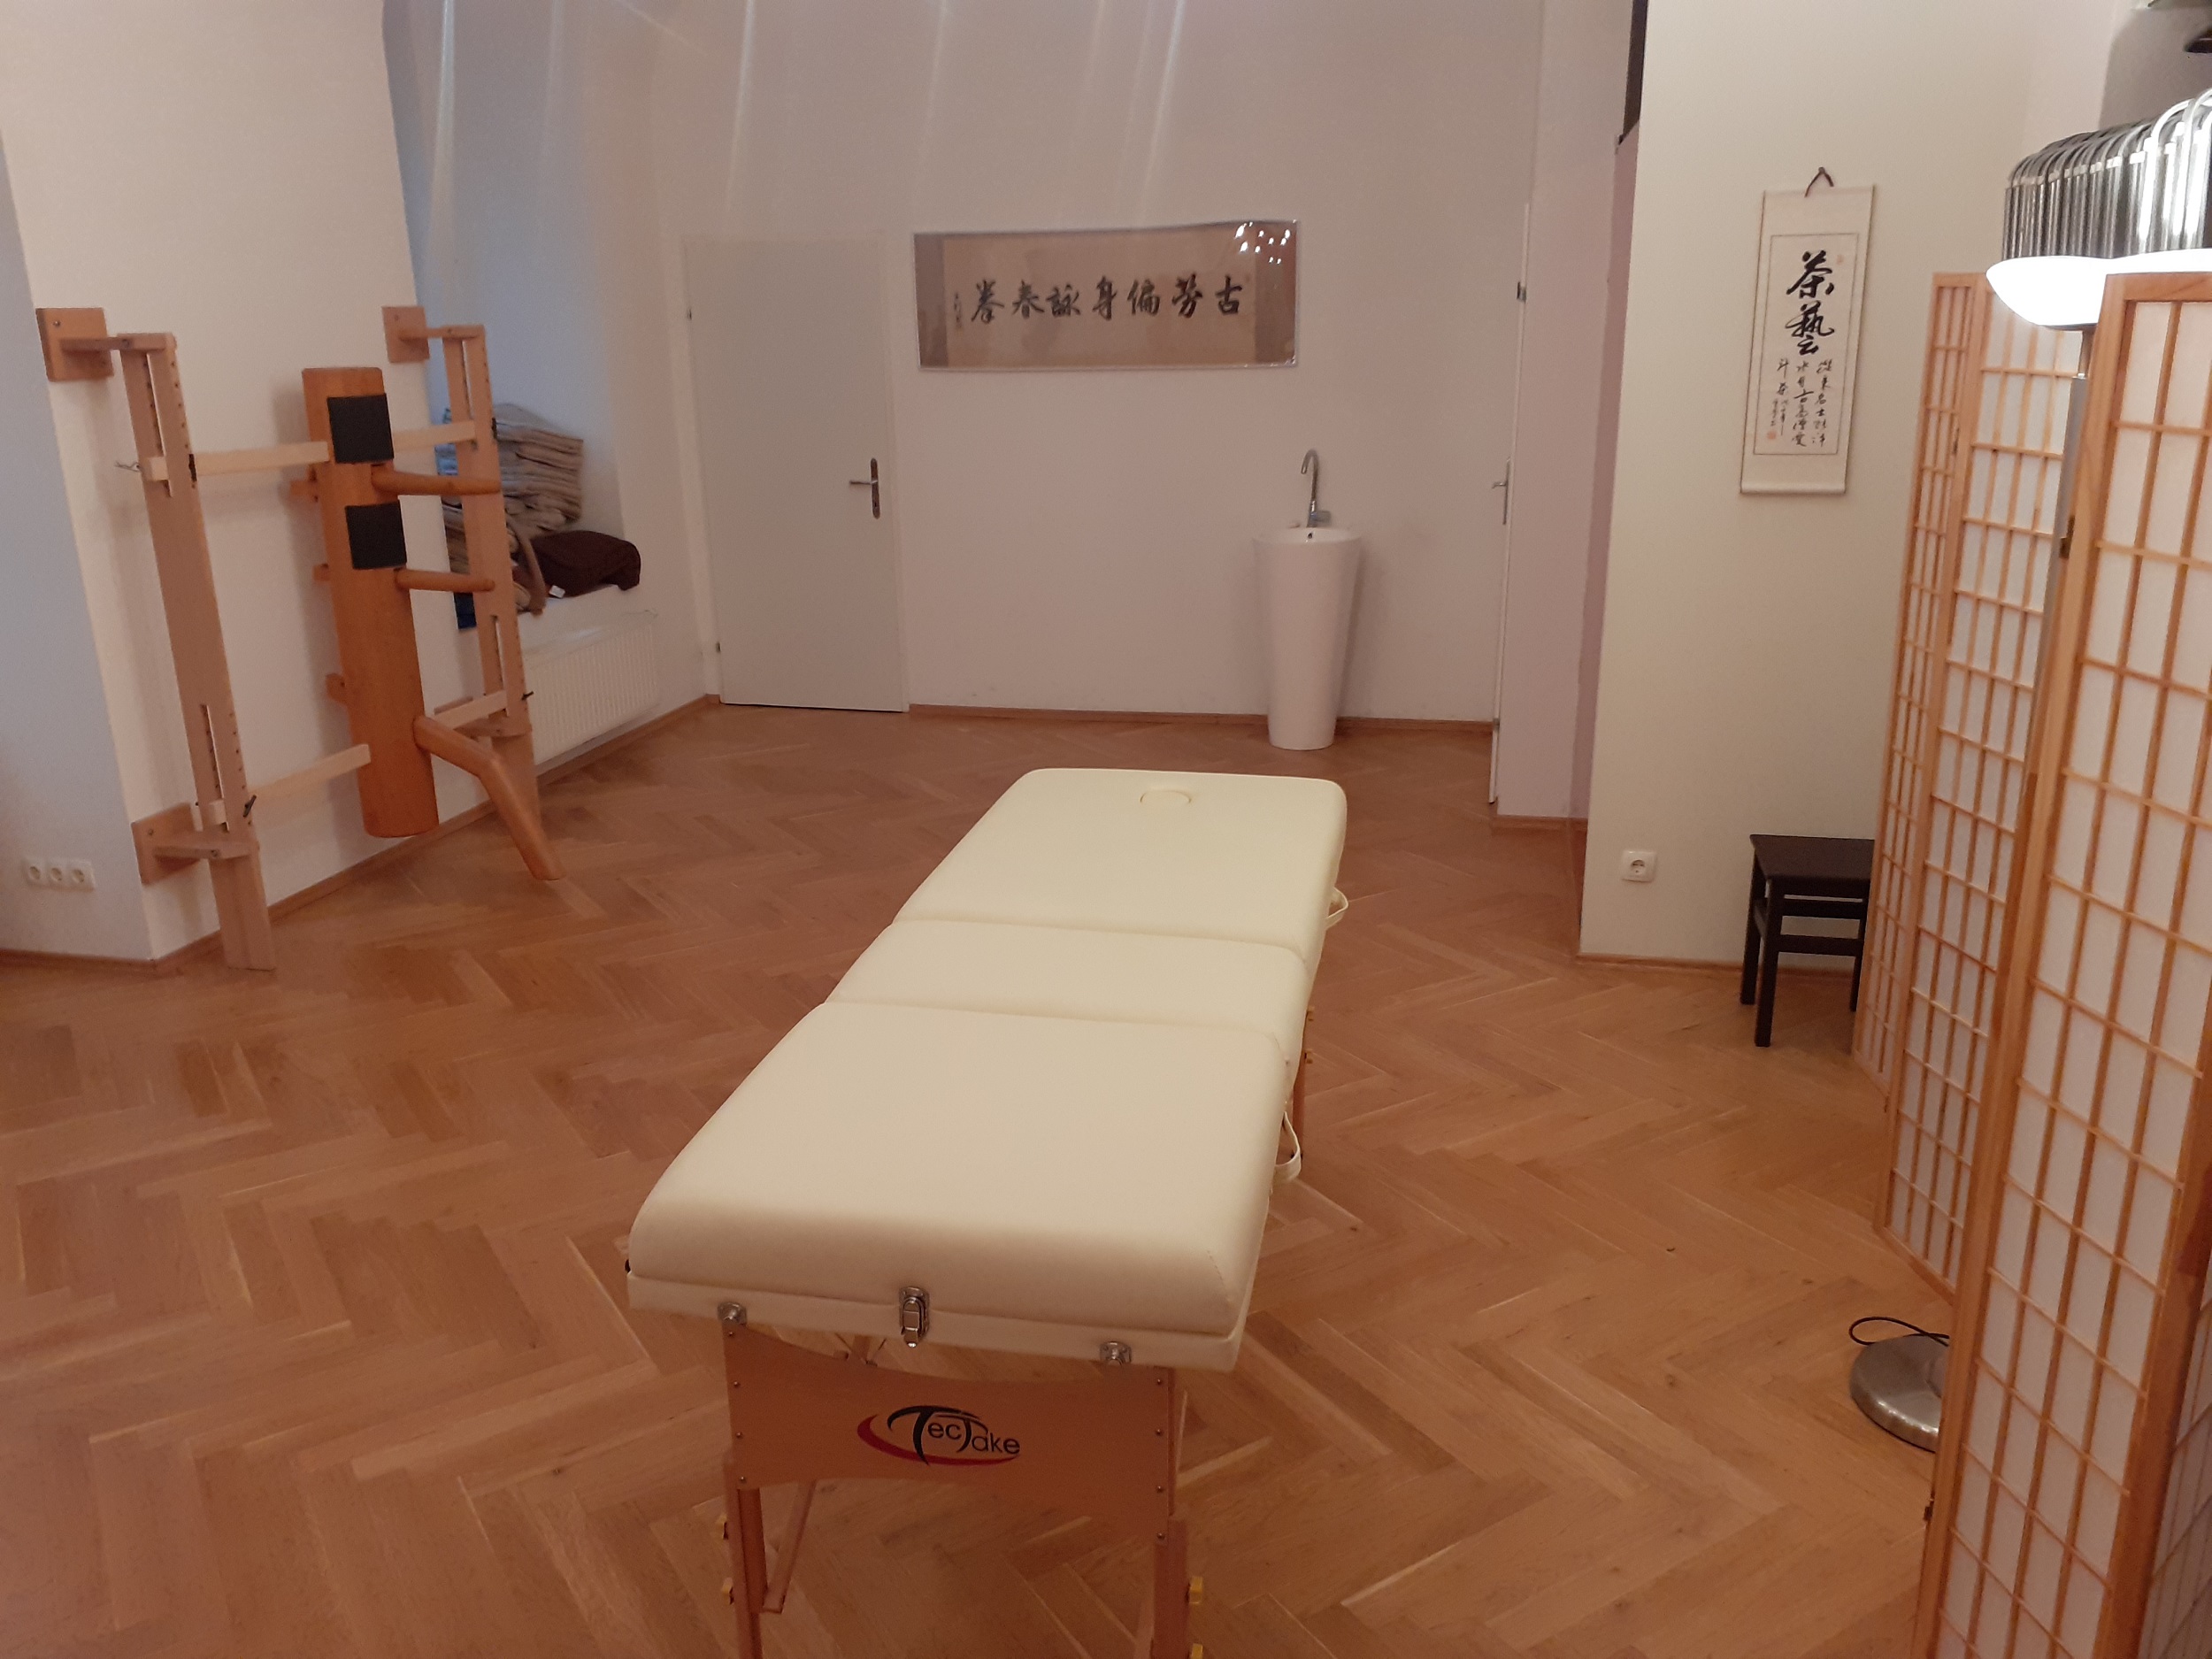 Seminarraum Miete, Studio Miete, Behandlungsraum, Wien, Yoga, Gymnastik, Tanz